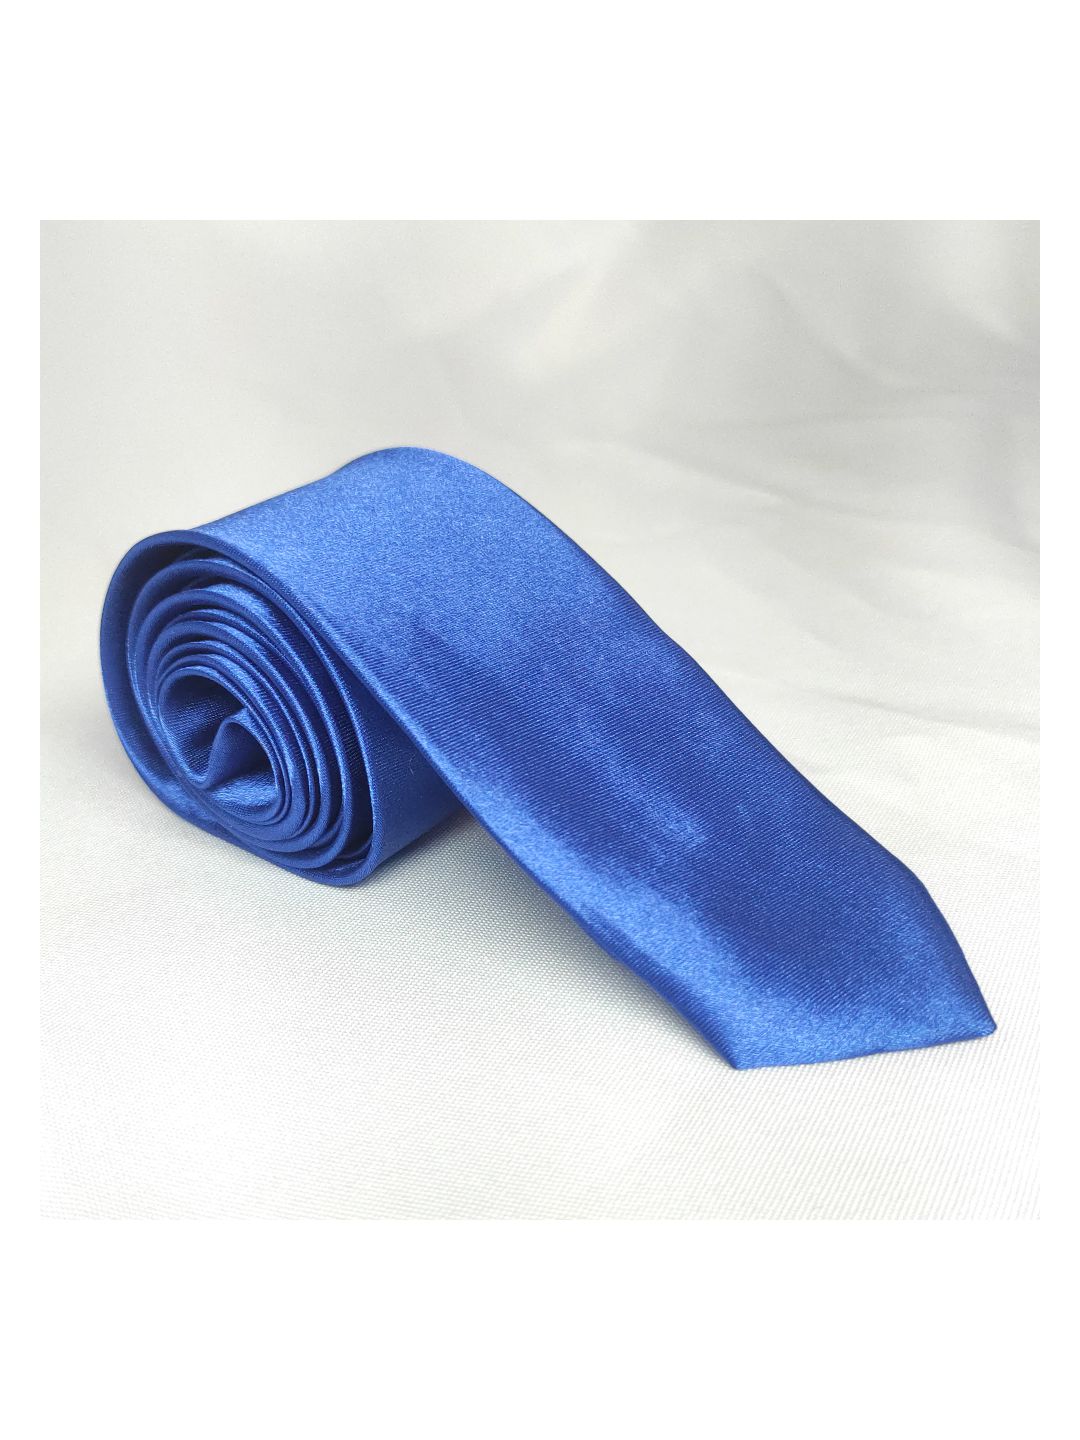 Gravata Slim Colors Azul Royal - Roberto Alfaiate | Trajes fino sob medida